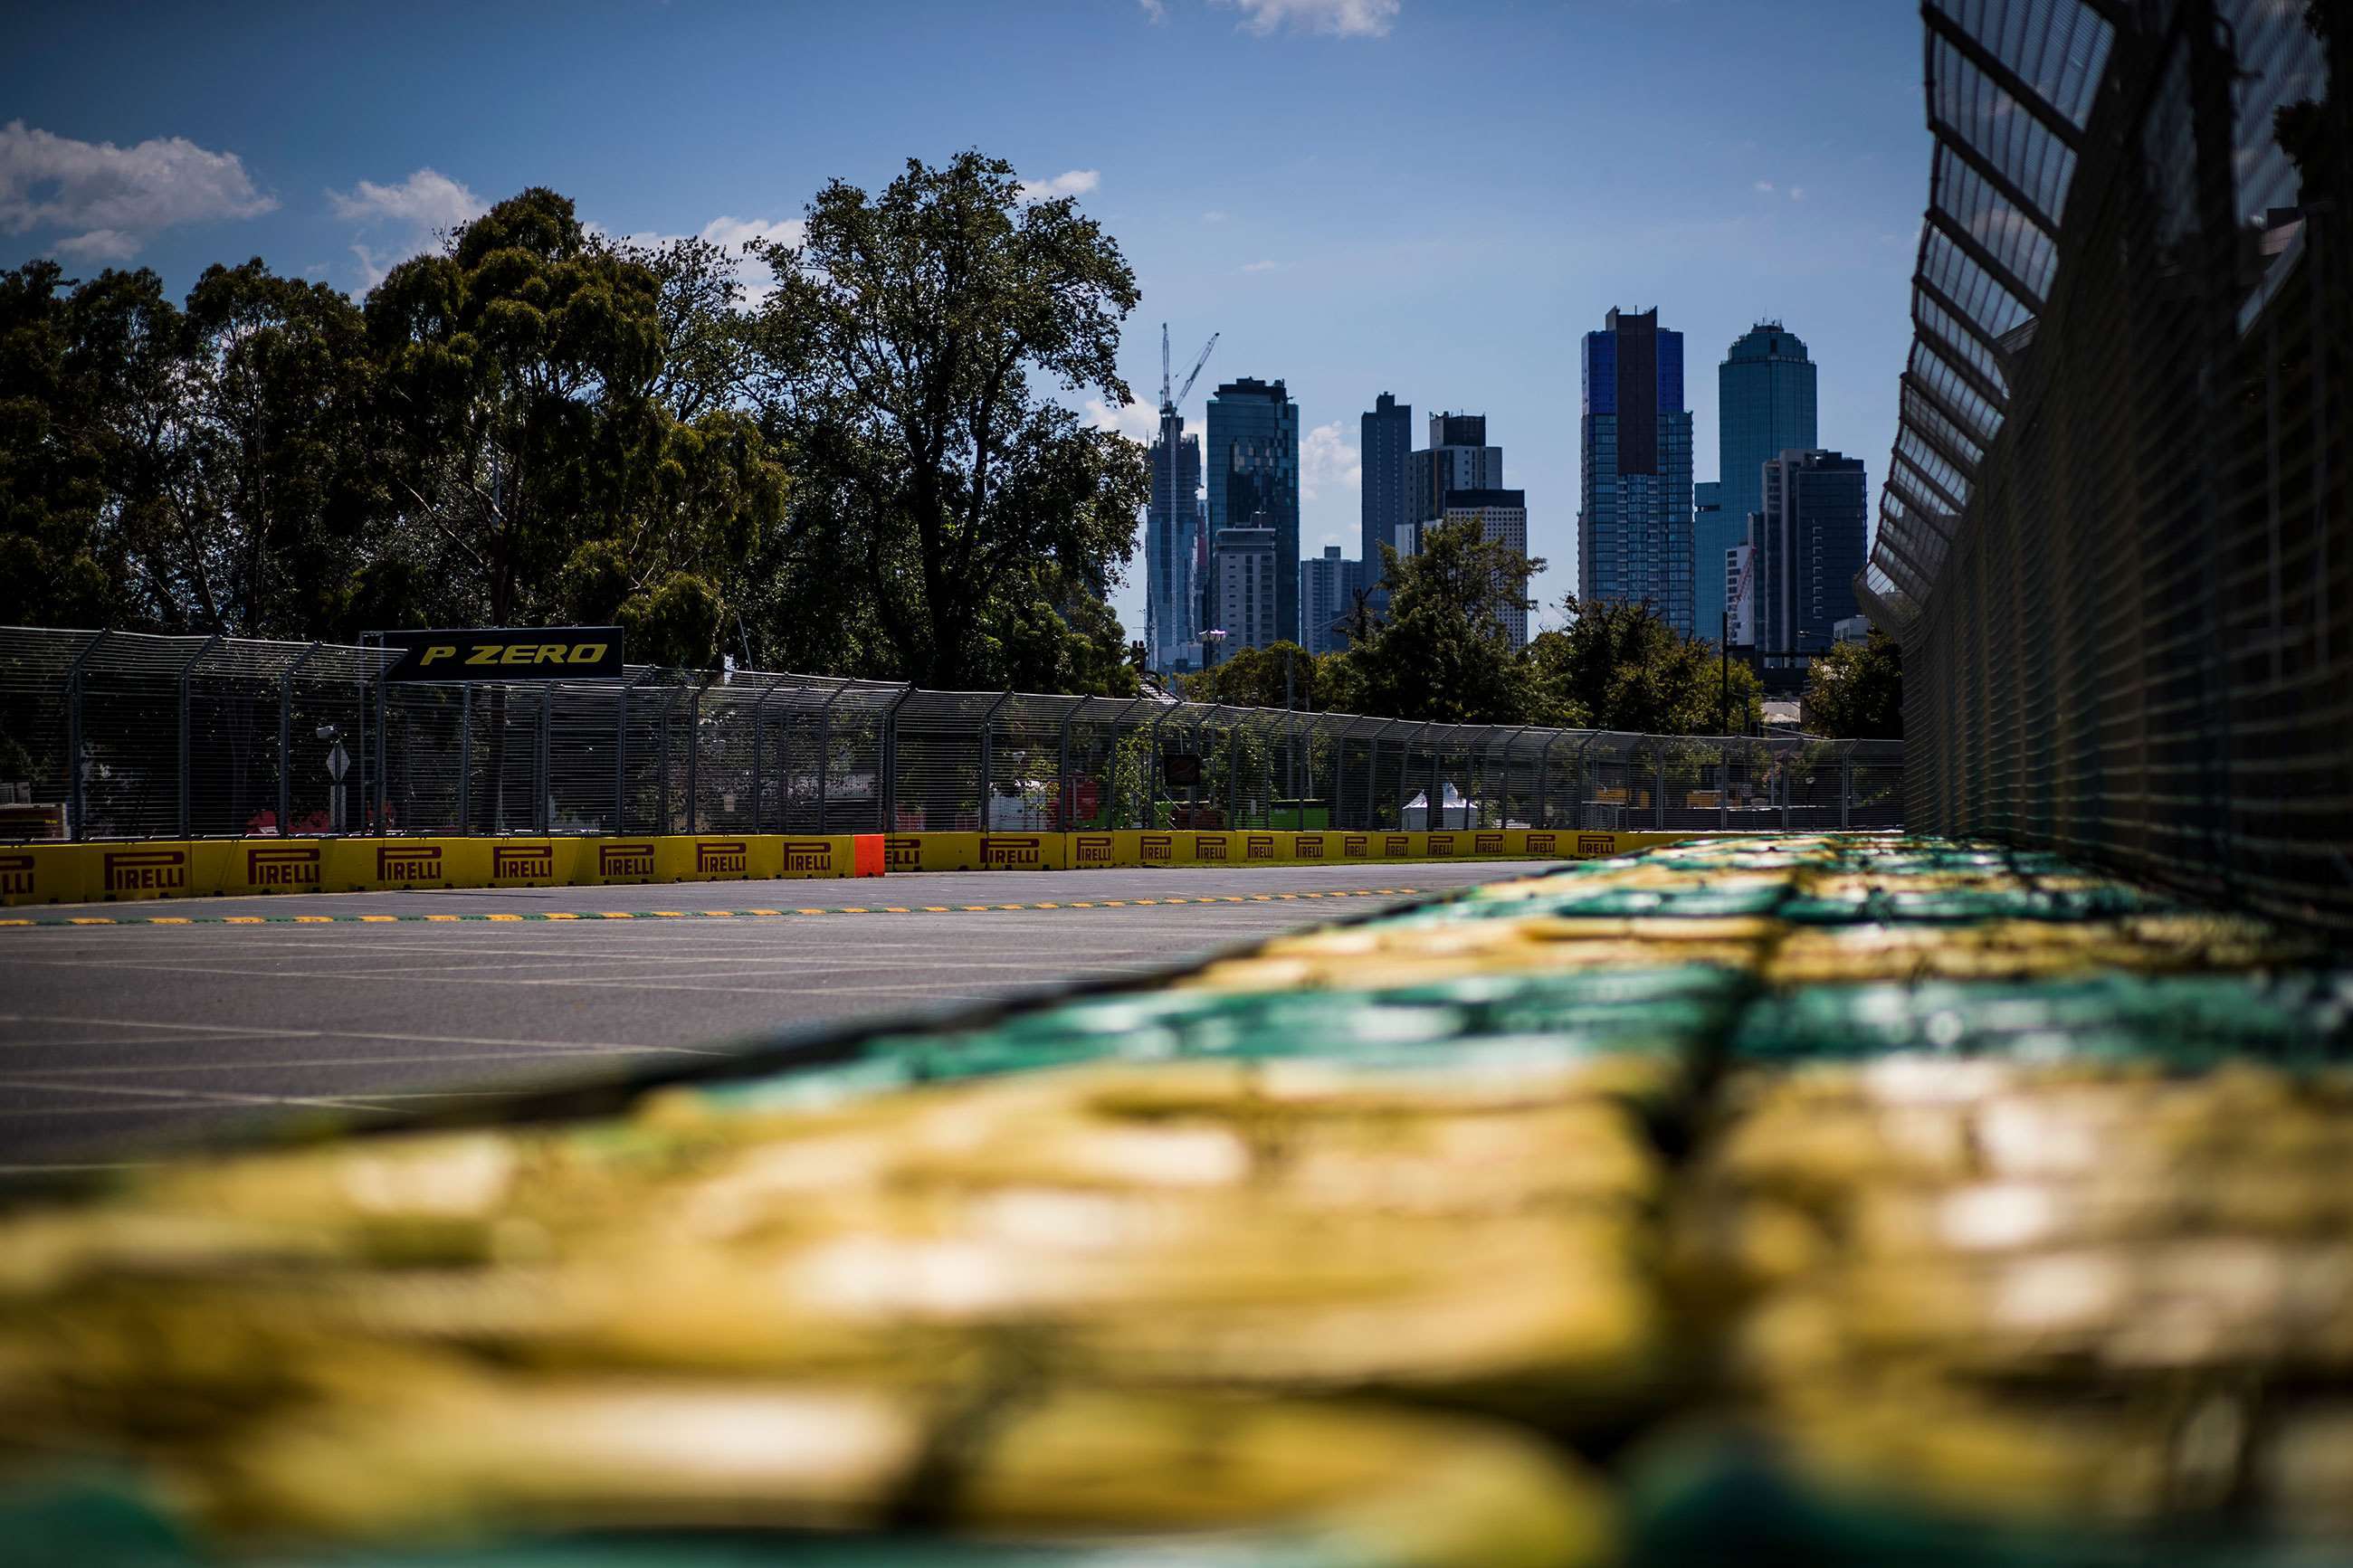 2020-formula-1-australian-grand-prix-cancelled-sam-bloxham-motorsport-images-goodwood-12032020.jpg